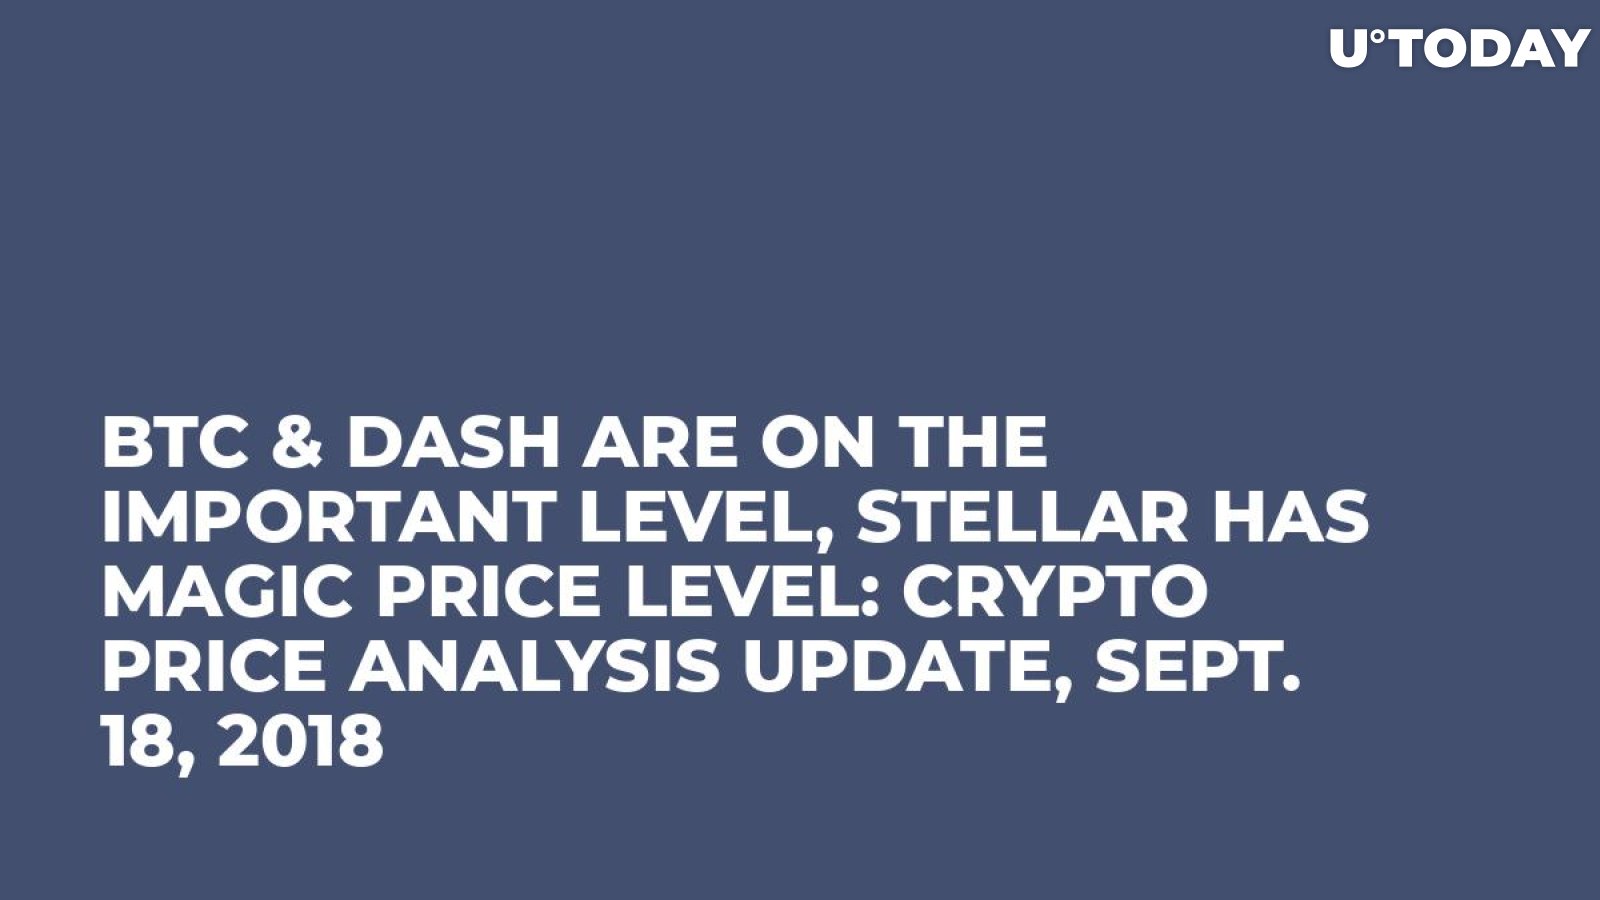 BTC & DASH Are On the Important Level, Stellar Has Magic Price Level: Crypto Price Analysis Update, Sept. 18, 2018